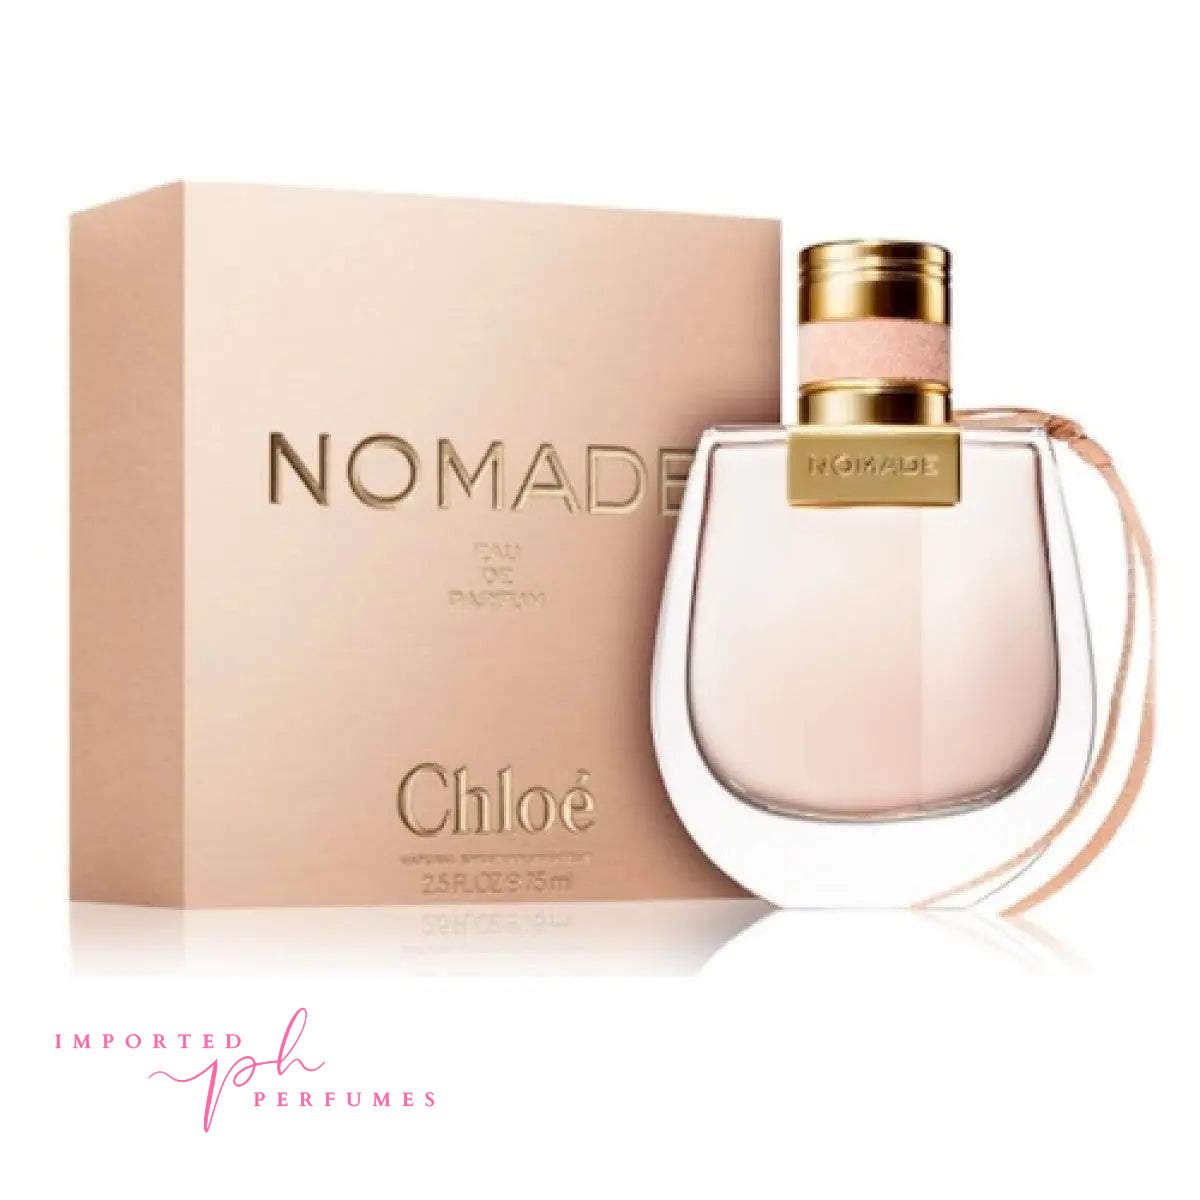 Chloé Nomade Eau de Parfum for Women 75ml-Imported Perfumes Co-chloe,for women,women